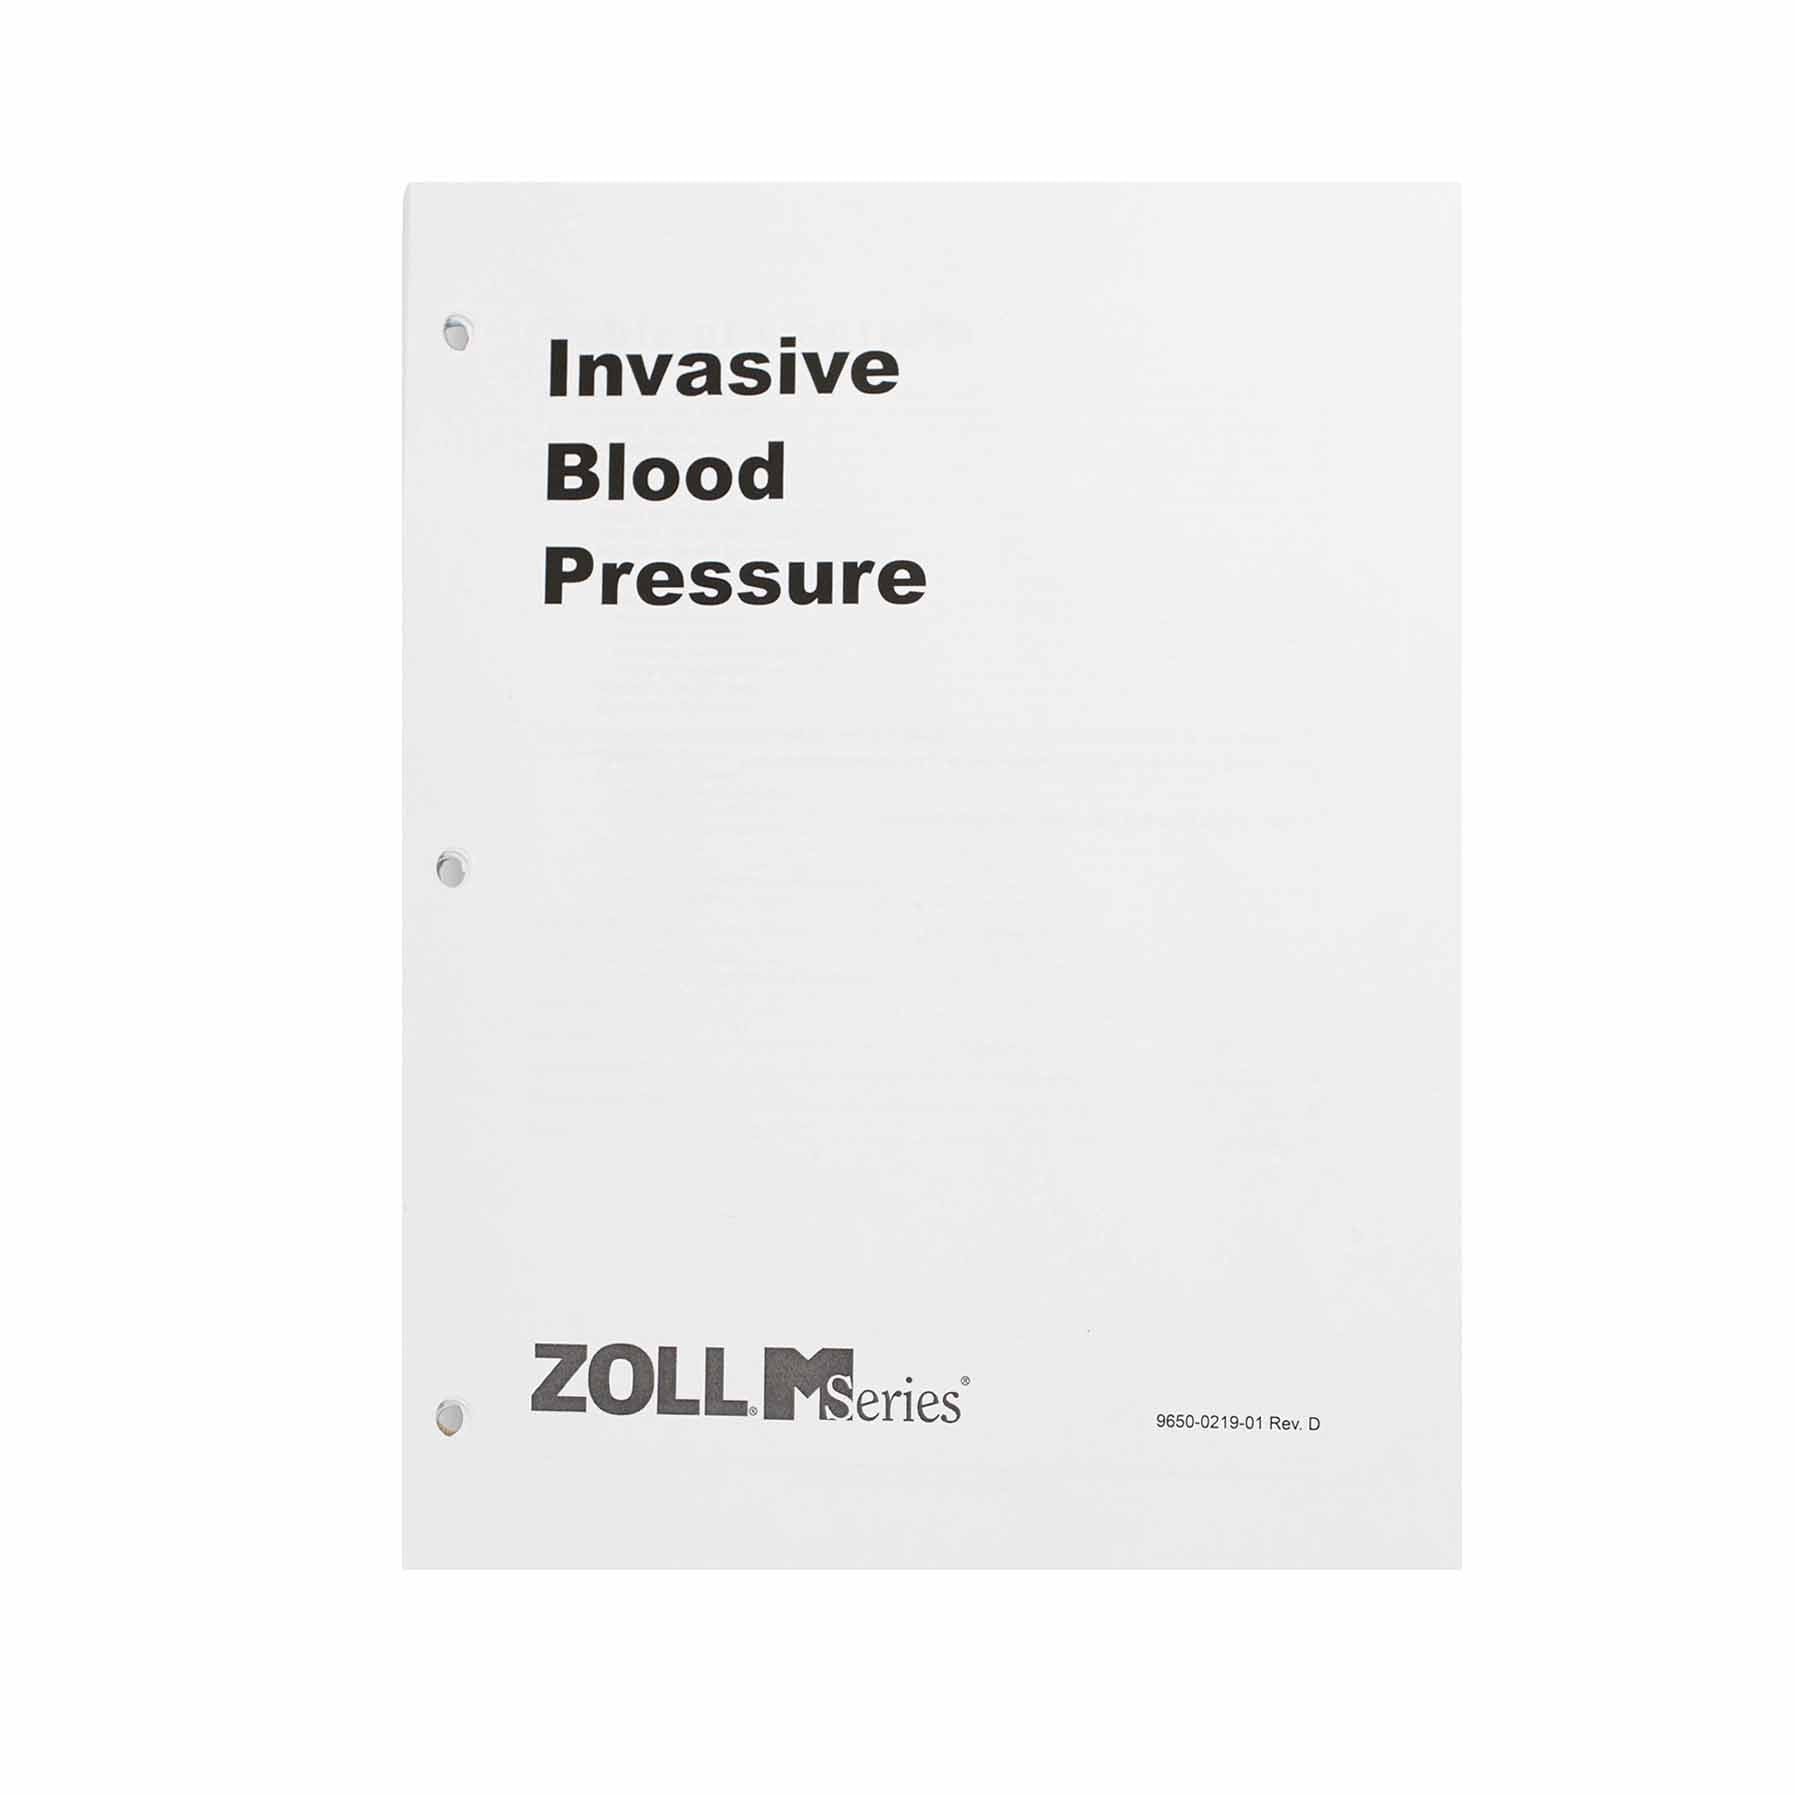 Zoll Invasive Blood Pressure Operator's Guide Insert